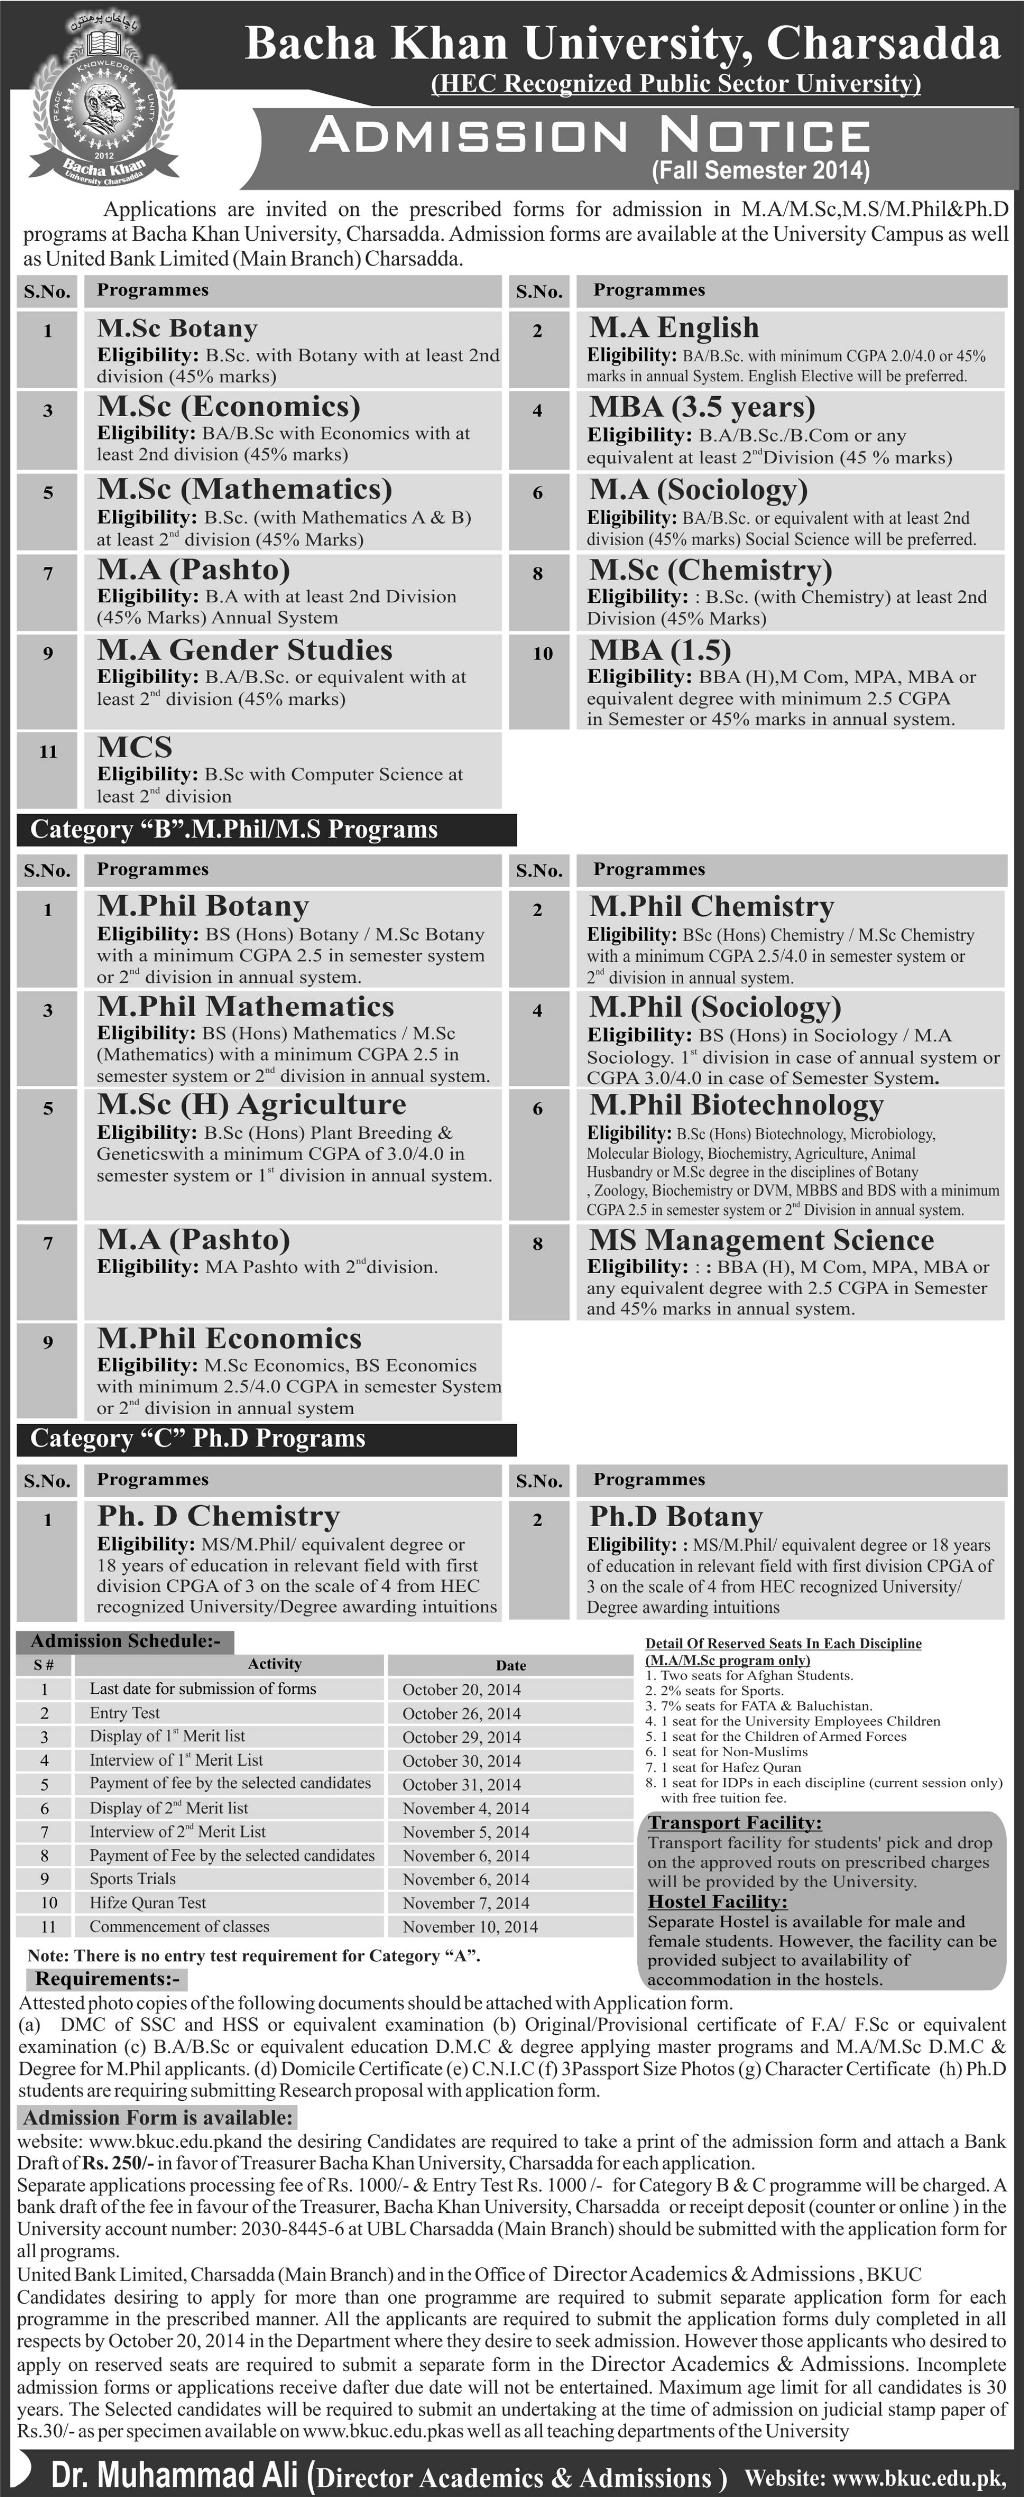 Bacha Khan University Msc, M.phil, Phd Admissions 2014 Form, Last Date